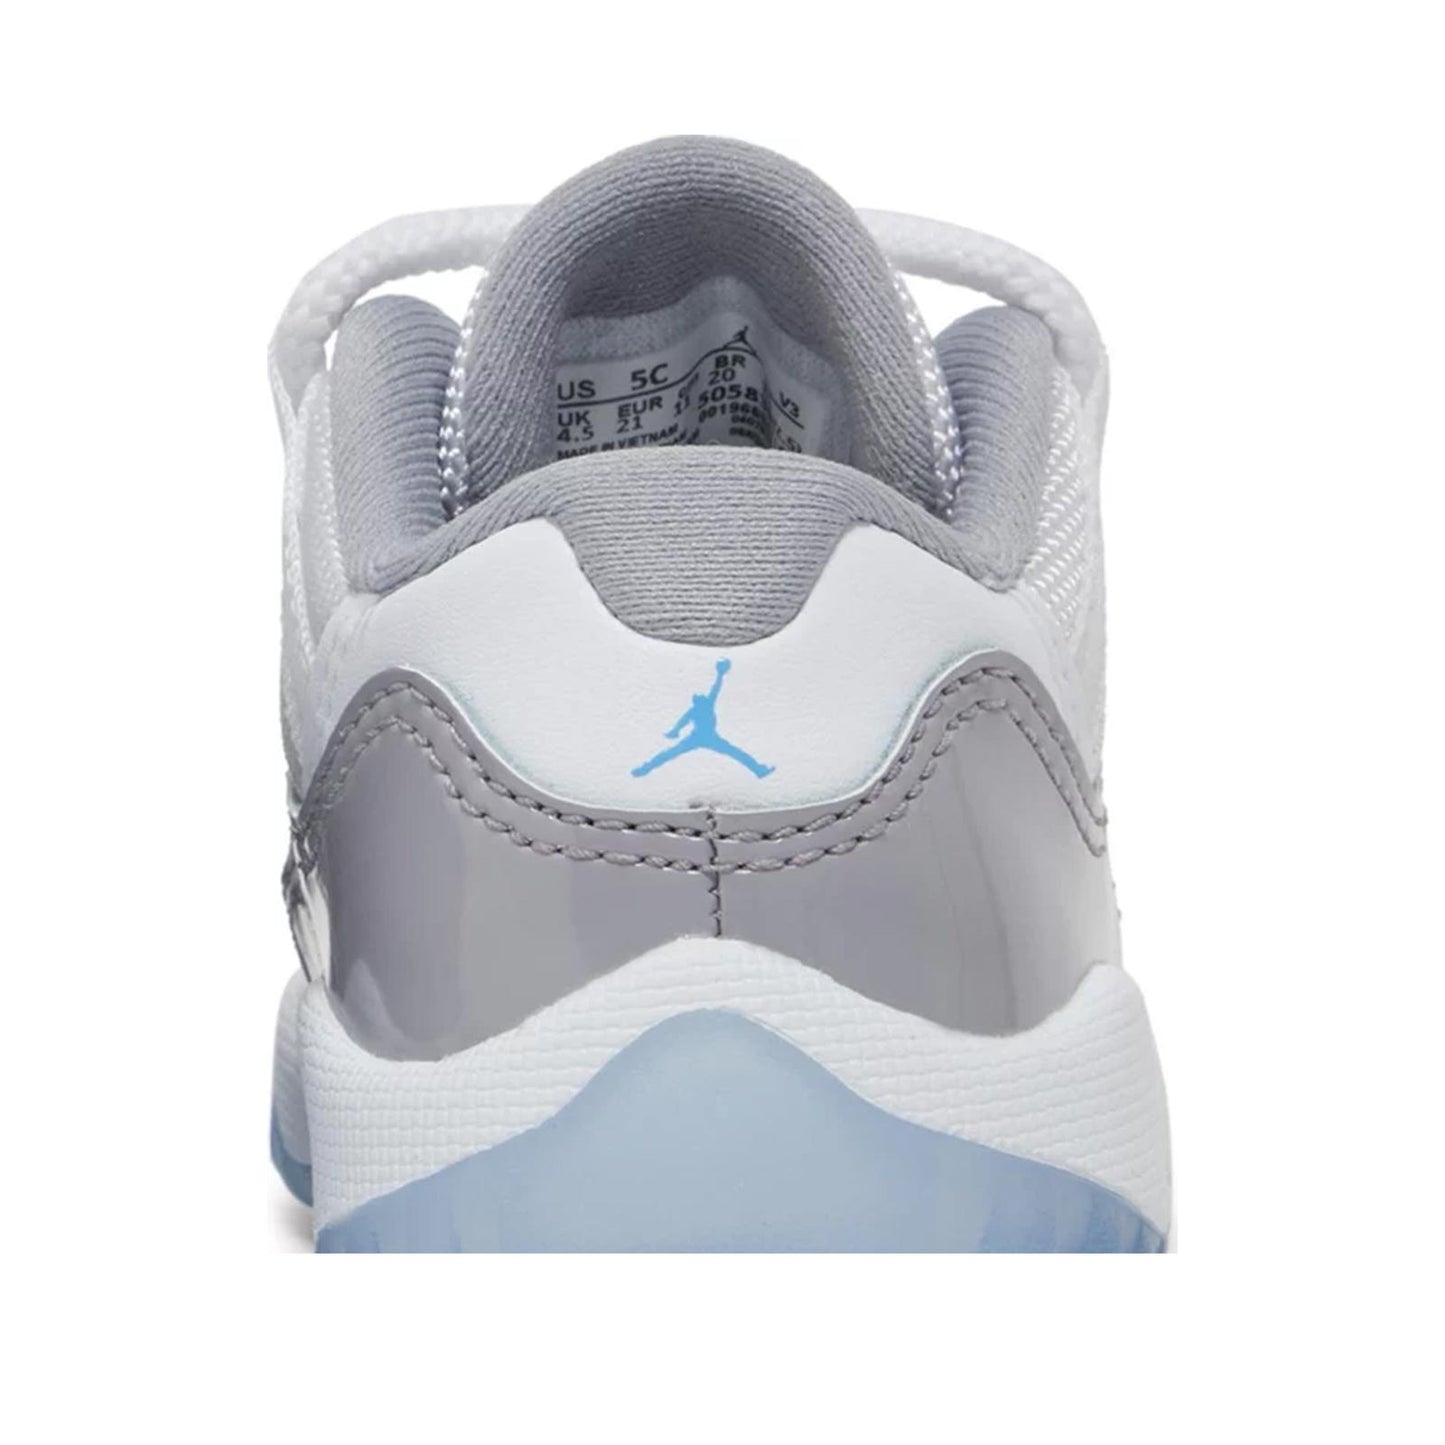 Air Jordan 1 Mid sneakers (TD), Cement Grey